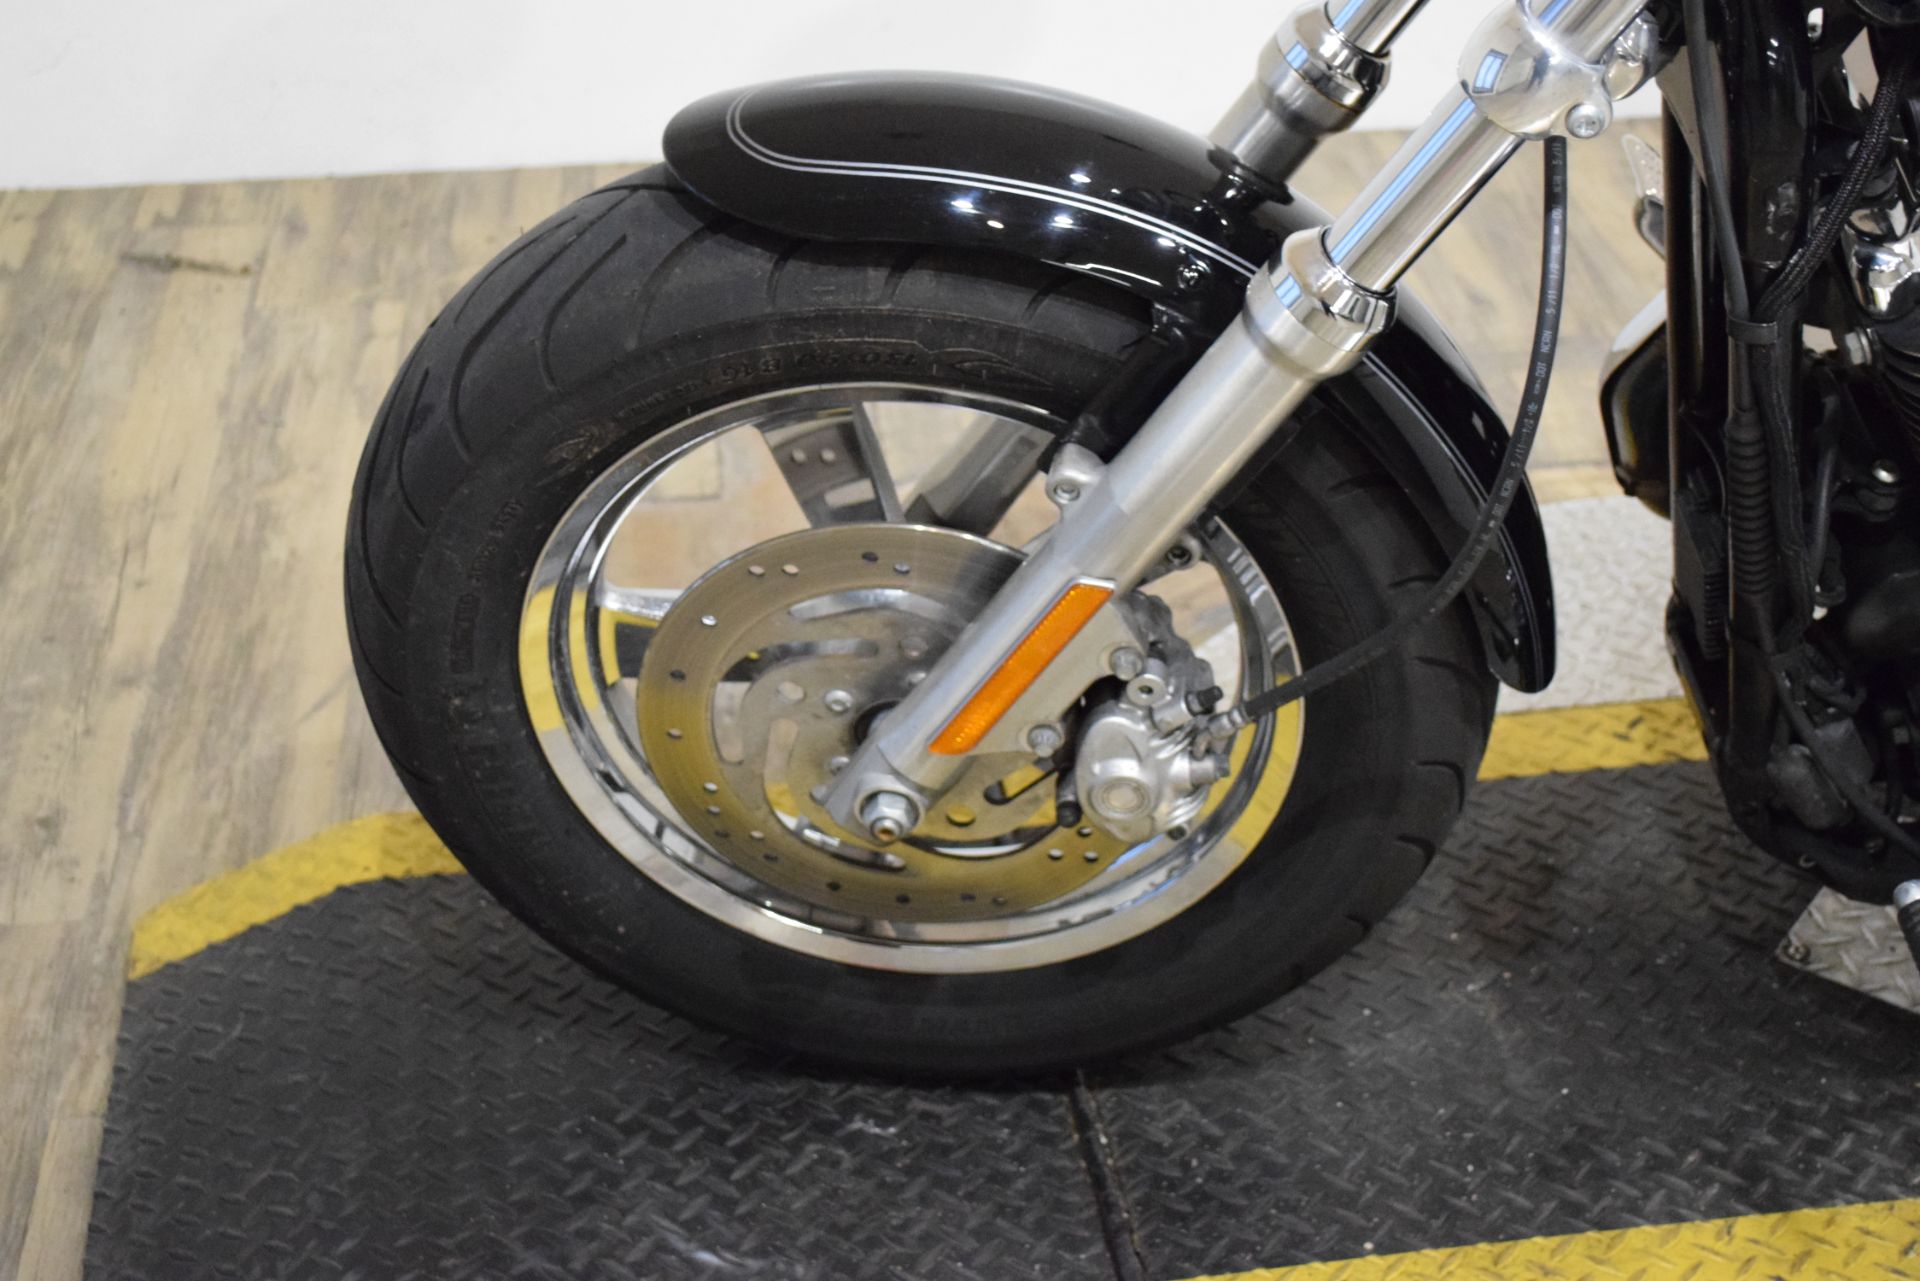 2013 Harley-Davidson Sportster® 1200 Custom in Wauconda, Illinois - Photo 21